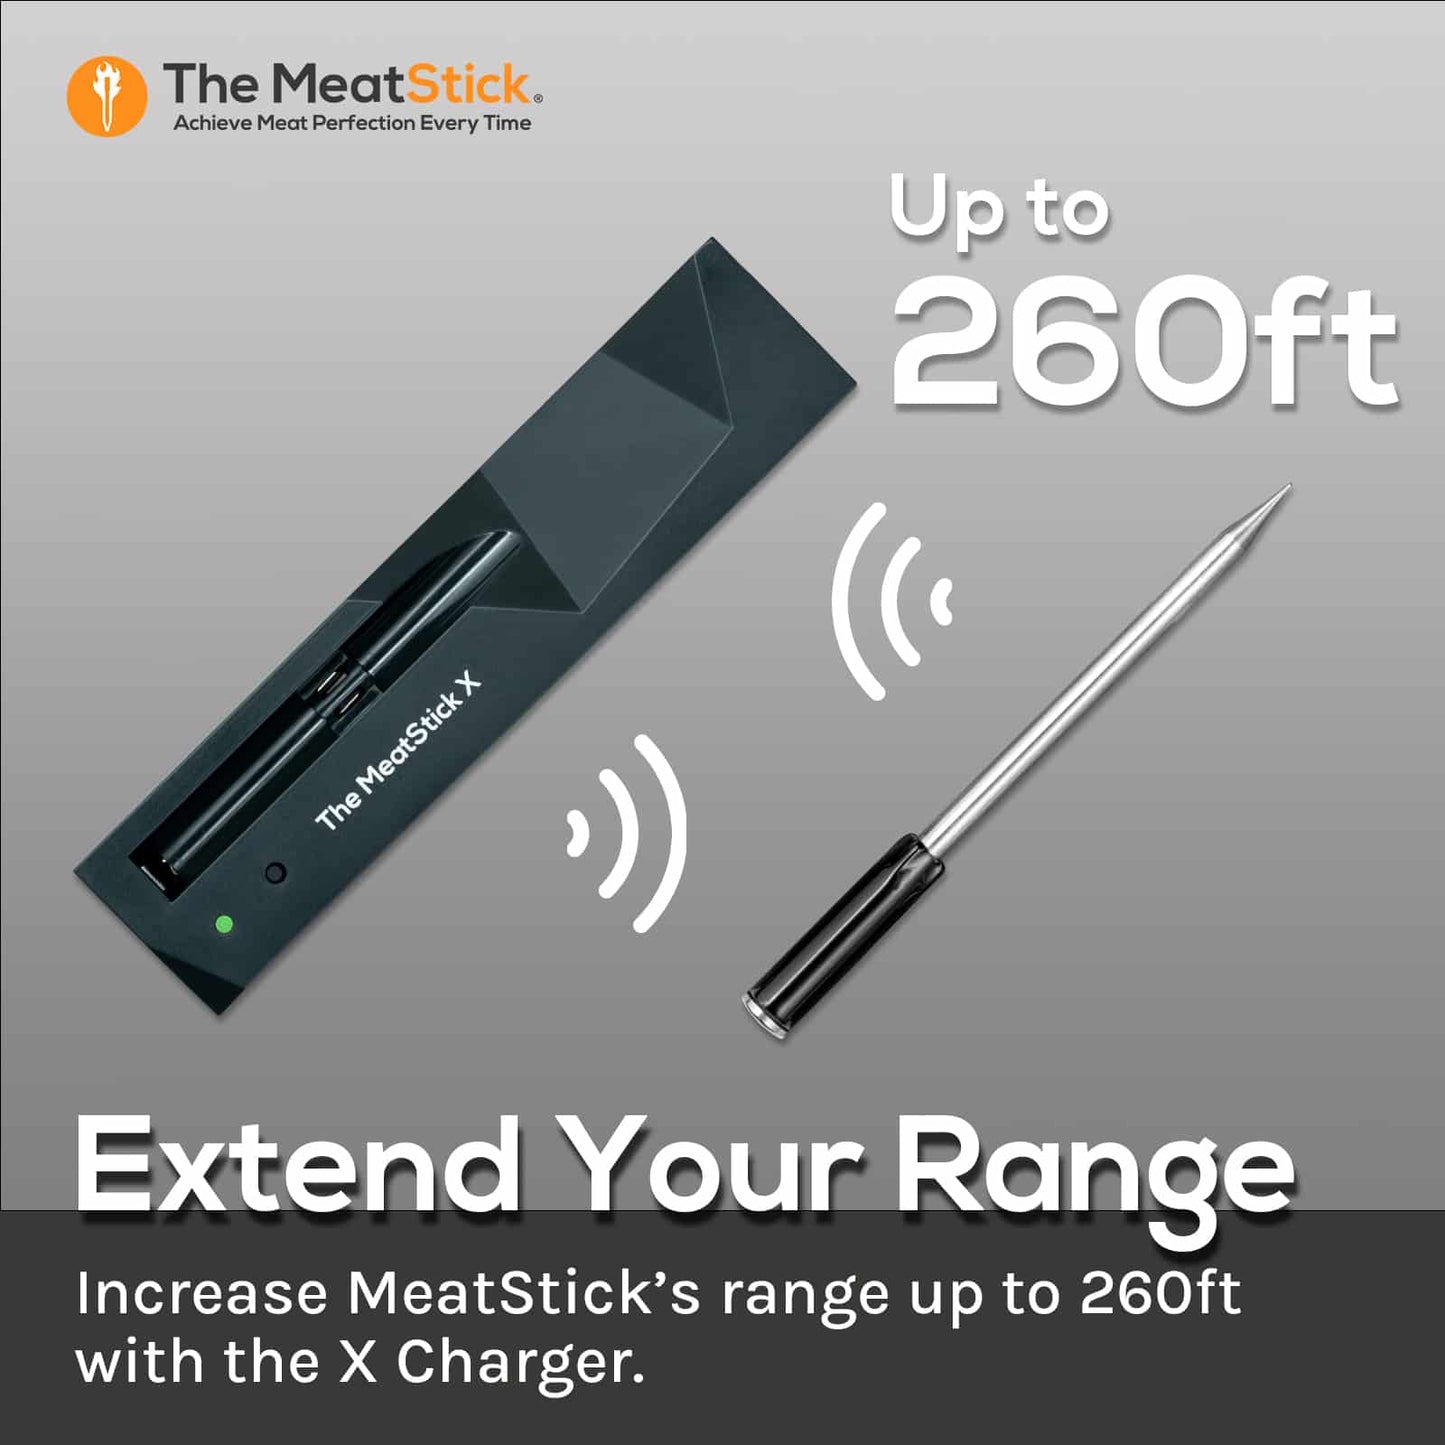 MeatStick Set - SAVE 30%